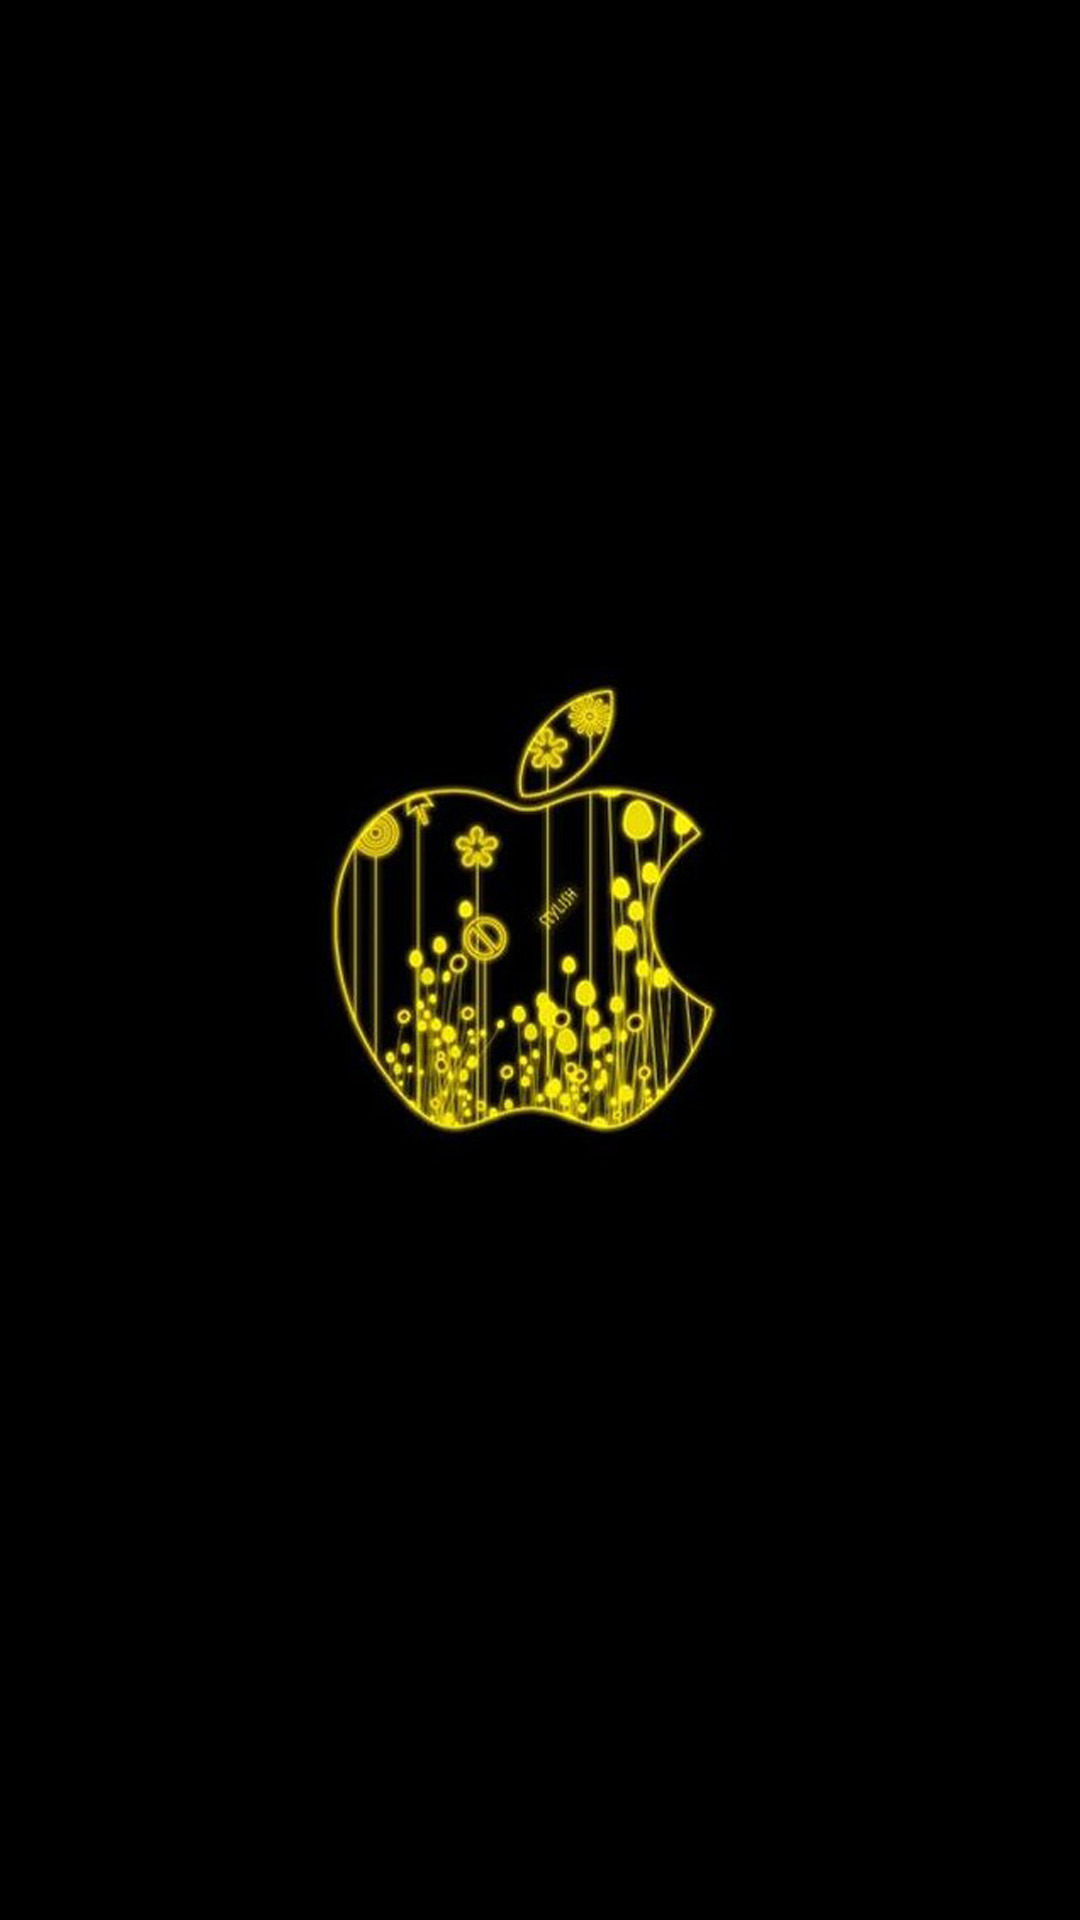 Wallpaper Black and Yellow Batman Logo, Background - Download Free Image